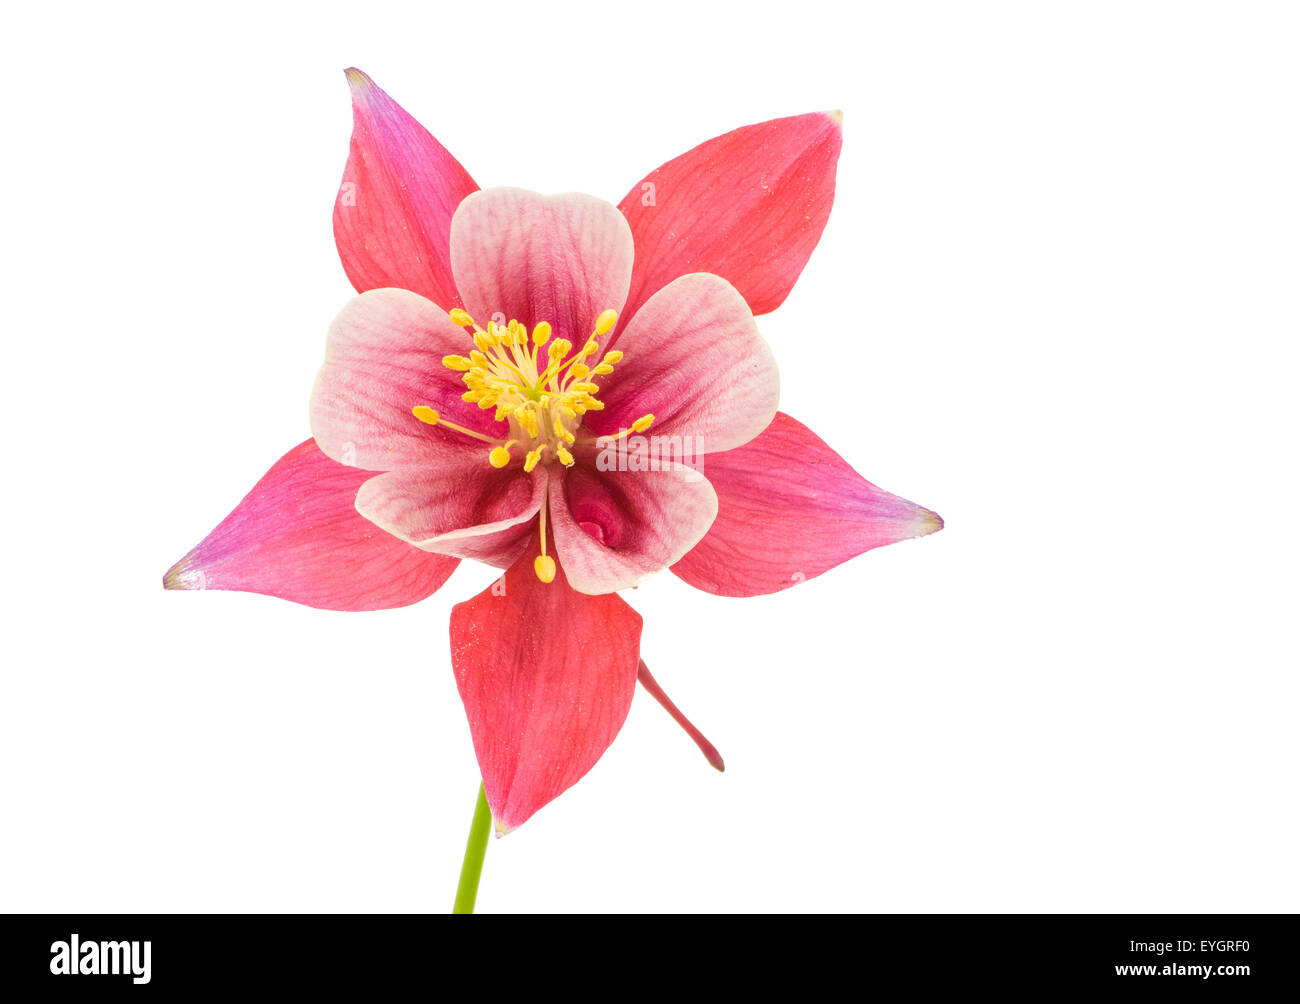 Isolated blossom of Columbine (Aquilegia) flower Stock Photo